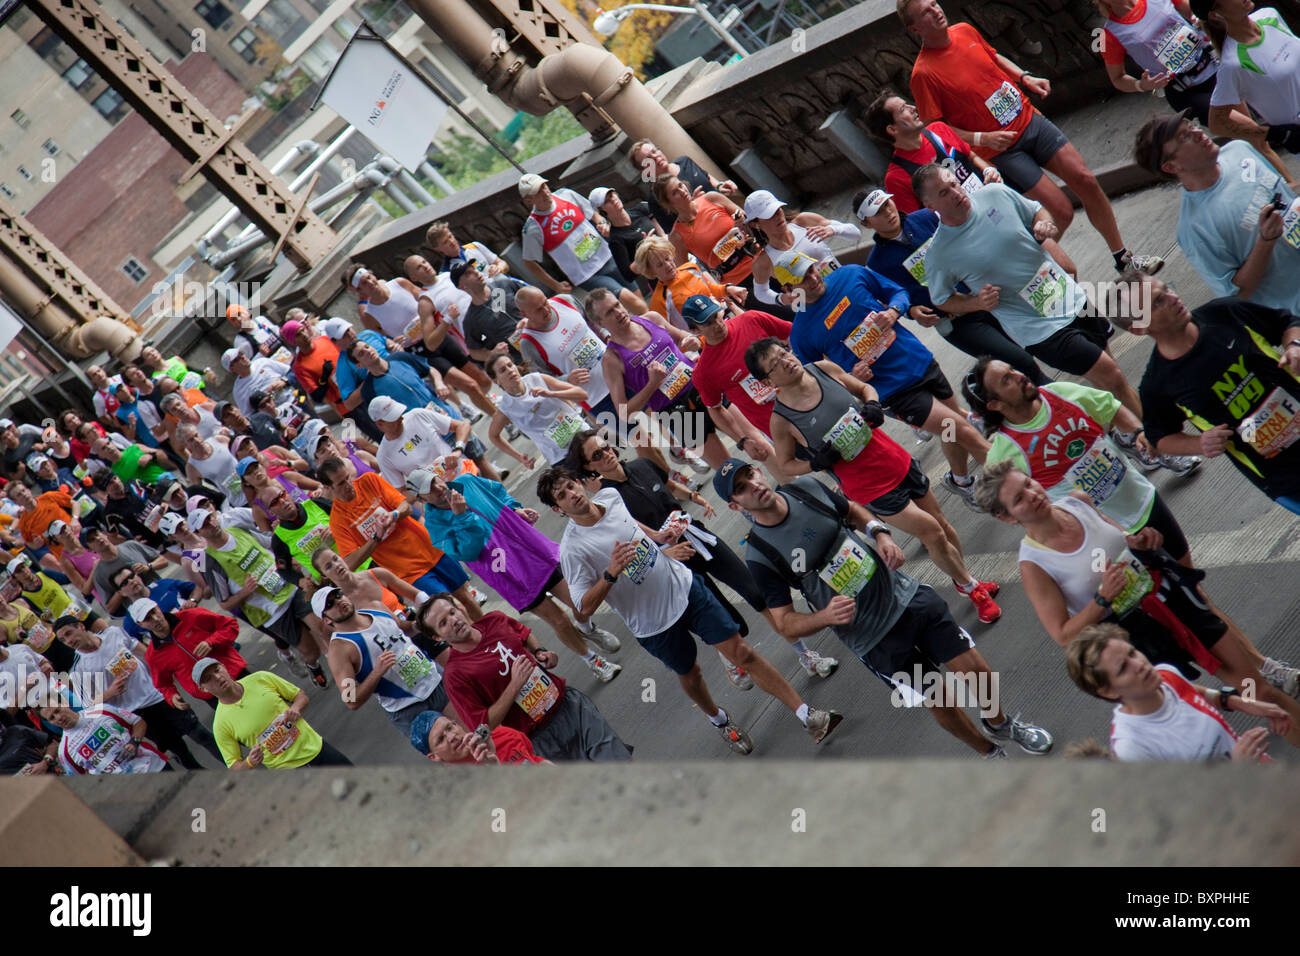 Runners crossing the 59th street Queensboro Bridge during the 2009 New York City Marathon Stock Photo